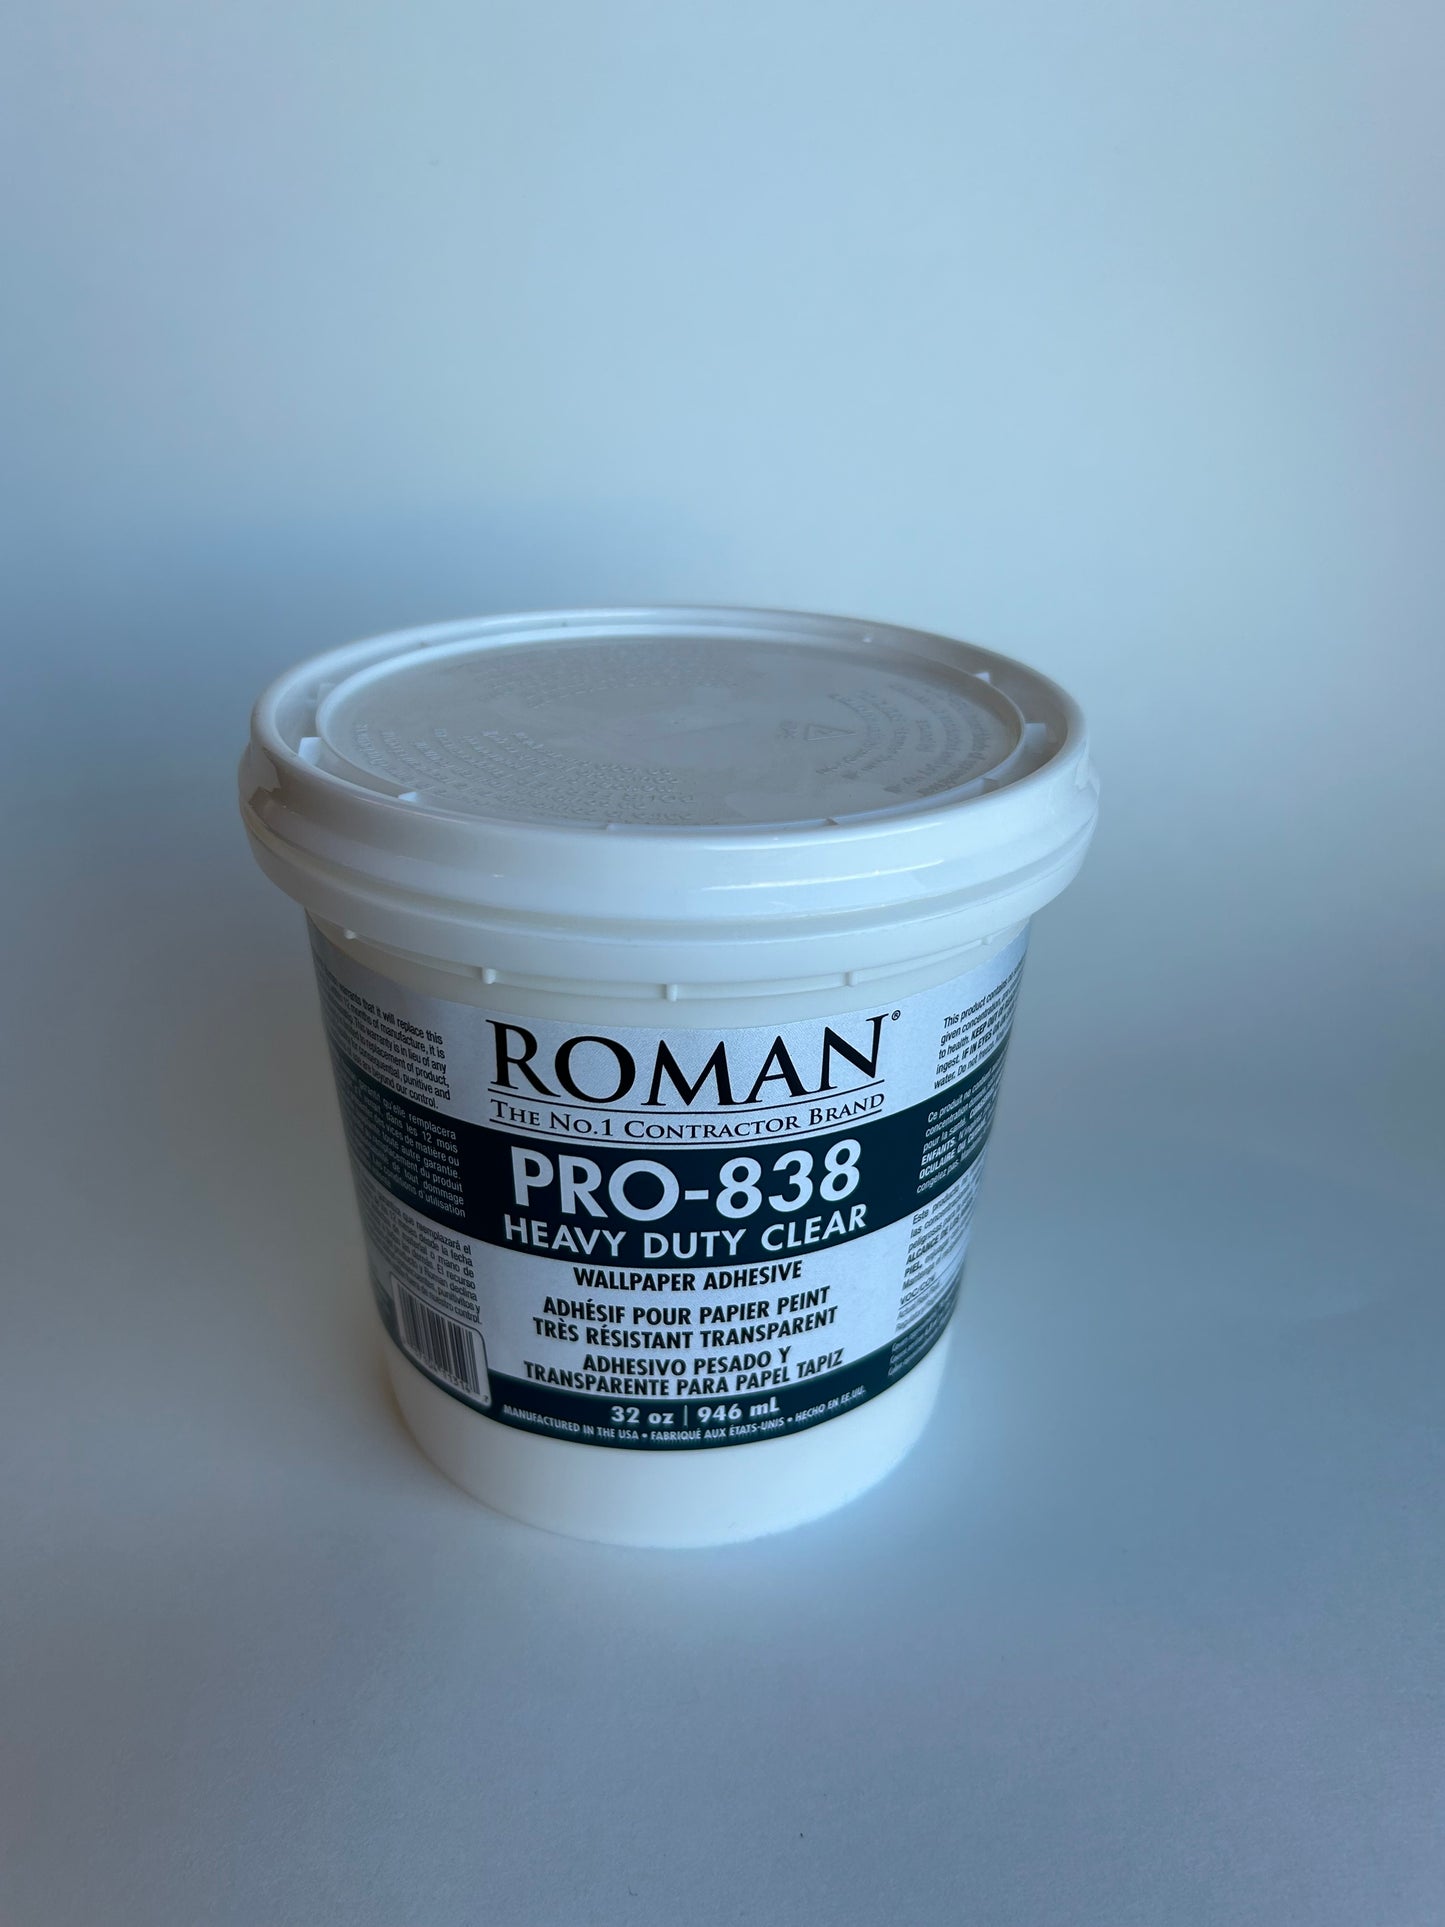 Roman Pro-838 Heavy Duty Clear Wallpaper Adhesive